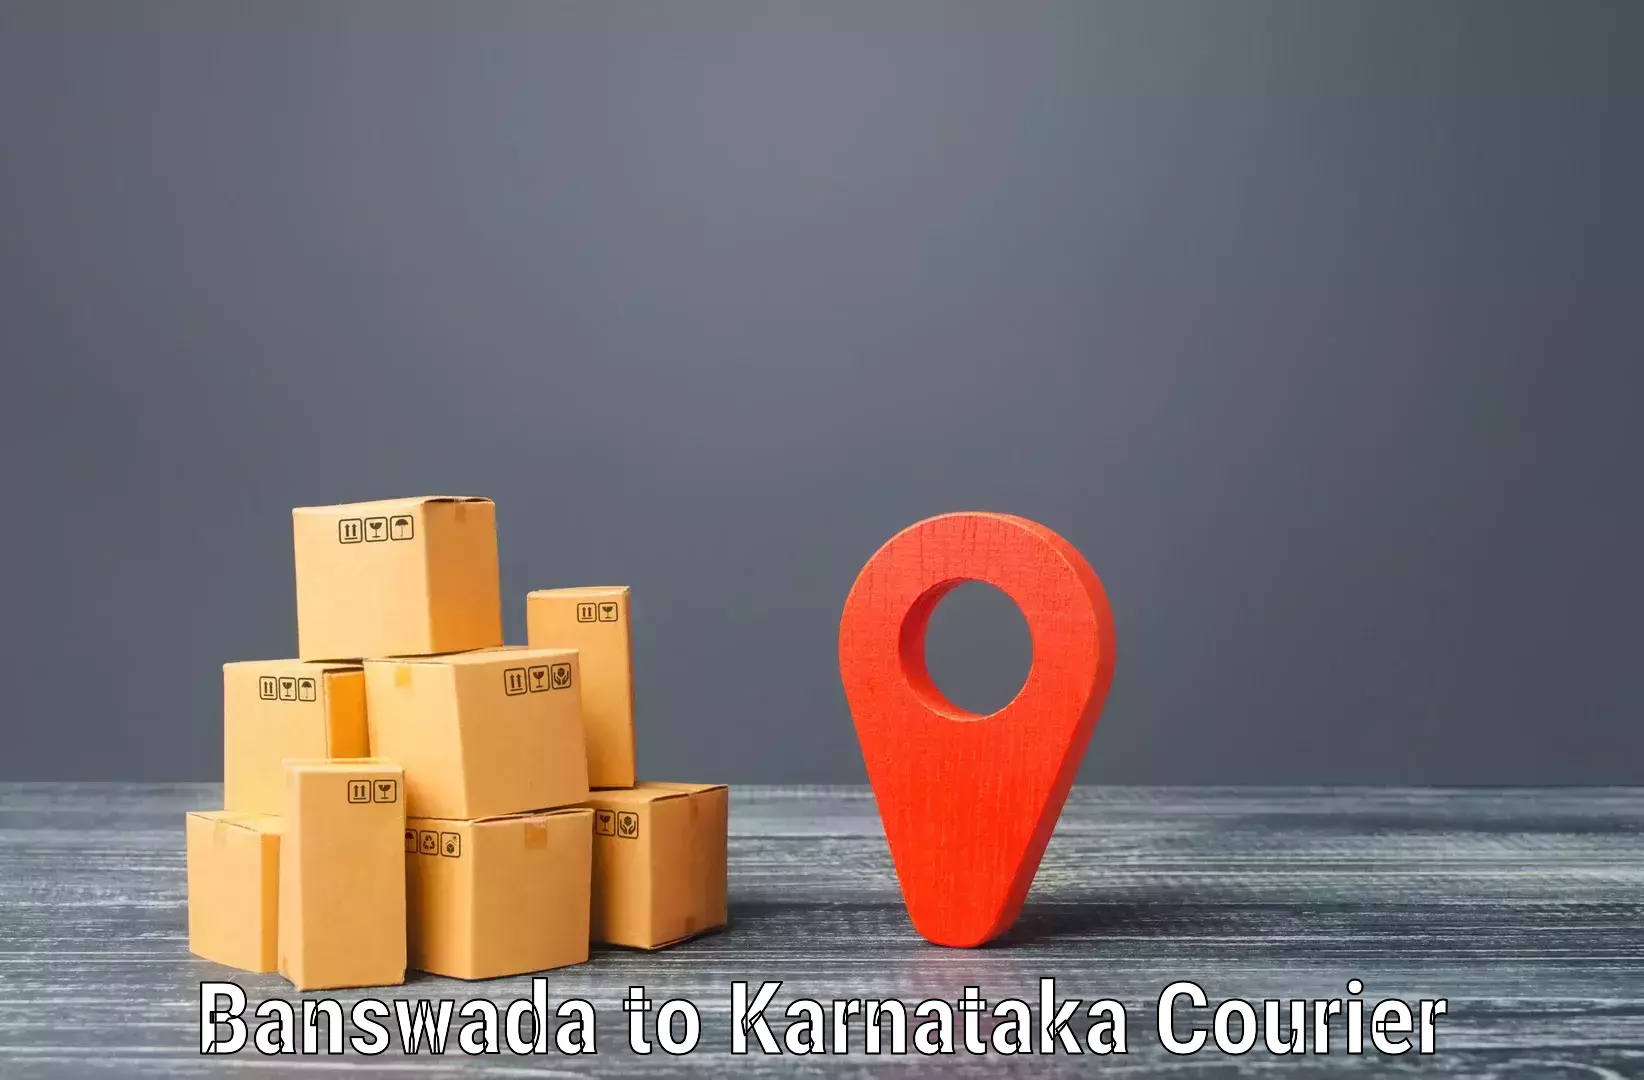 Courier service innovation Banswada to Hubli